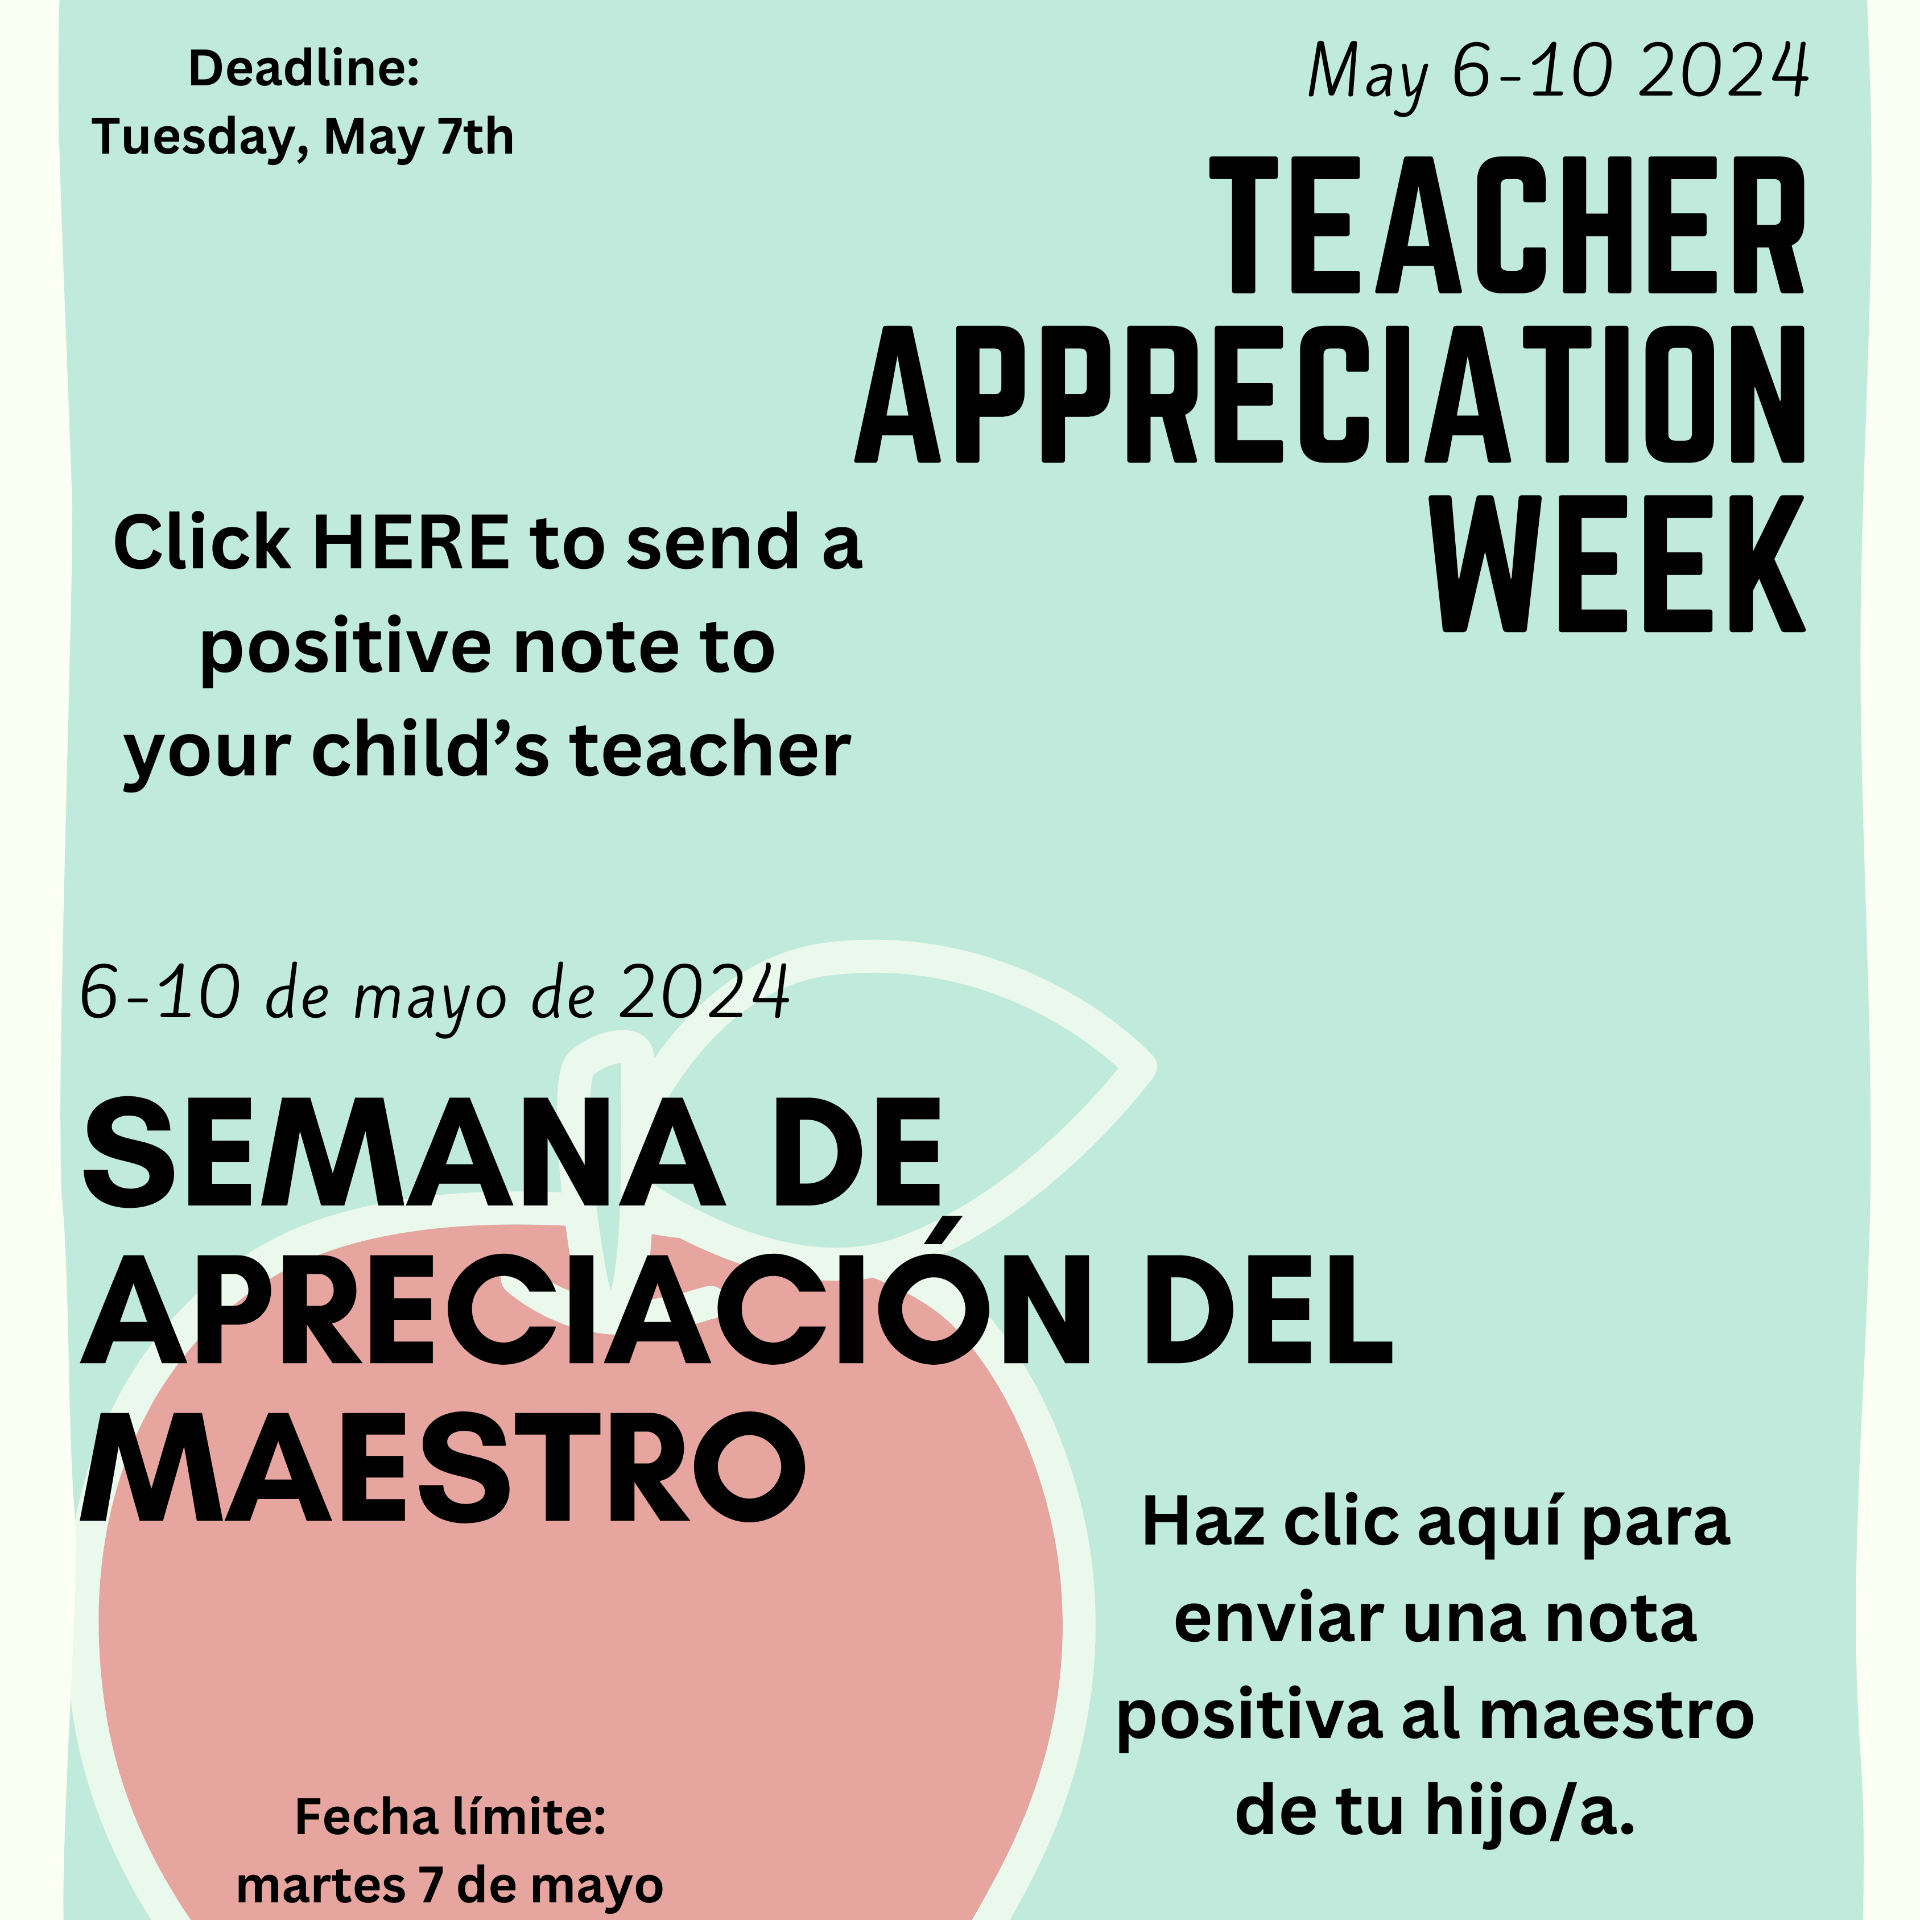 Teacher Appreciation week messages to teachers. Click image to open Google Form. 